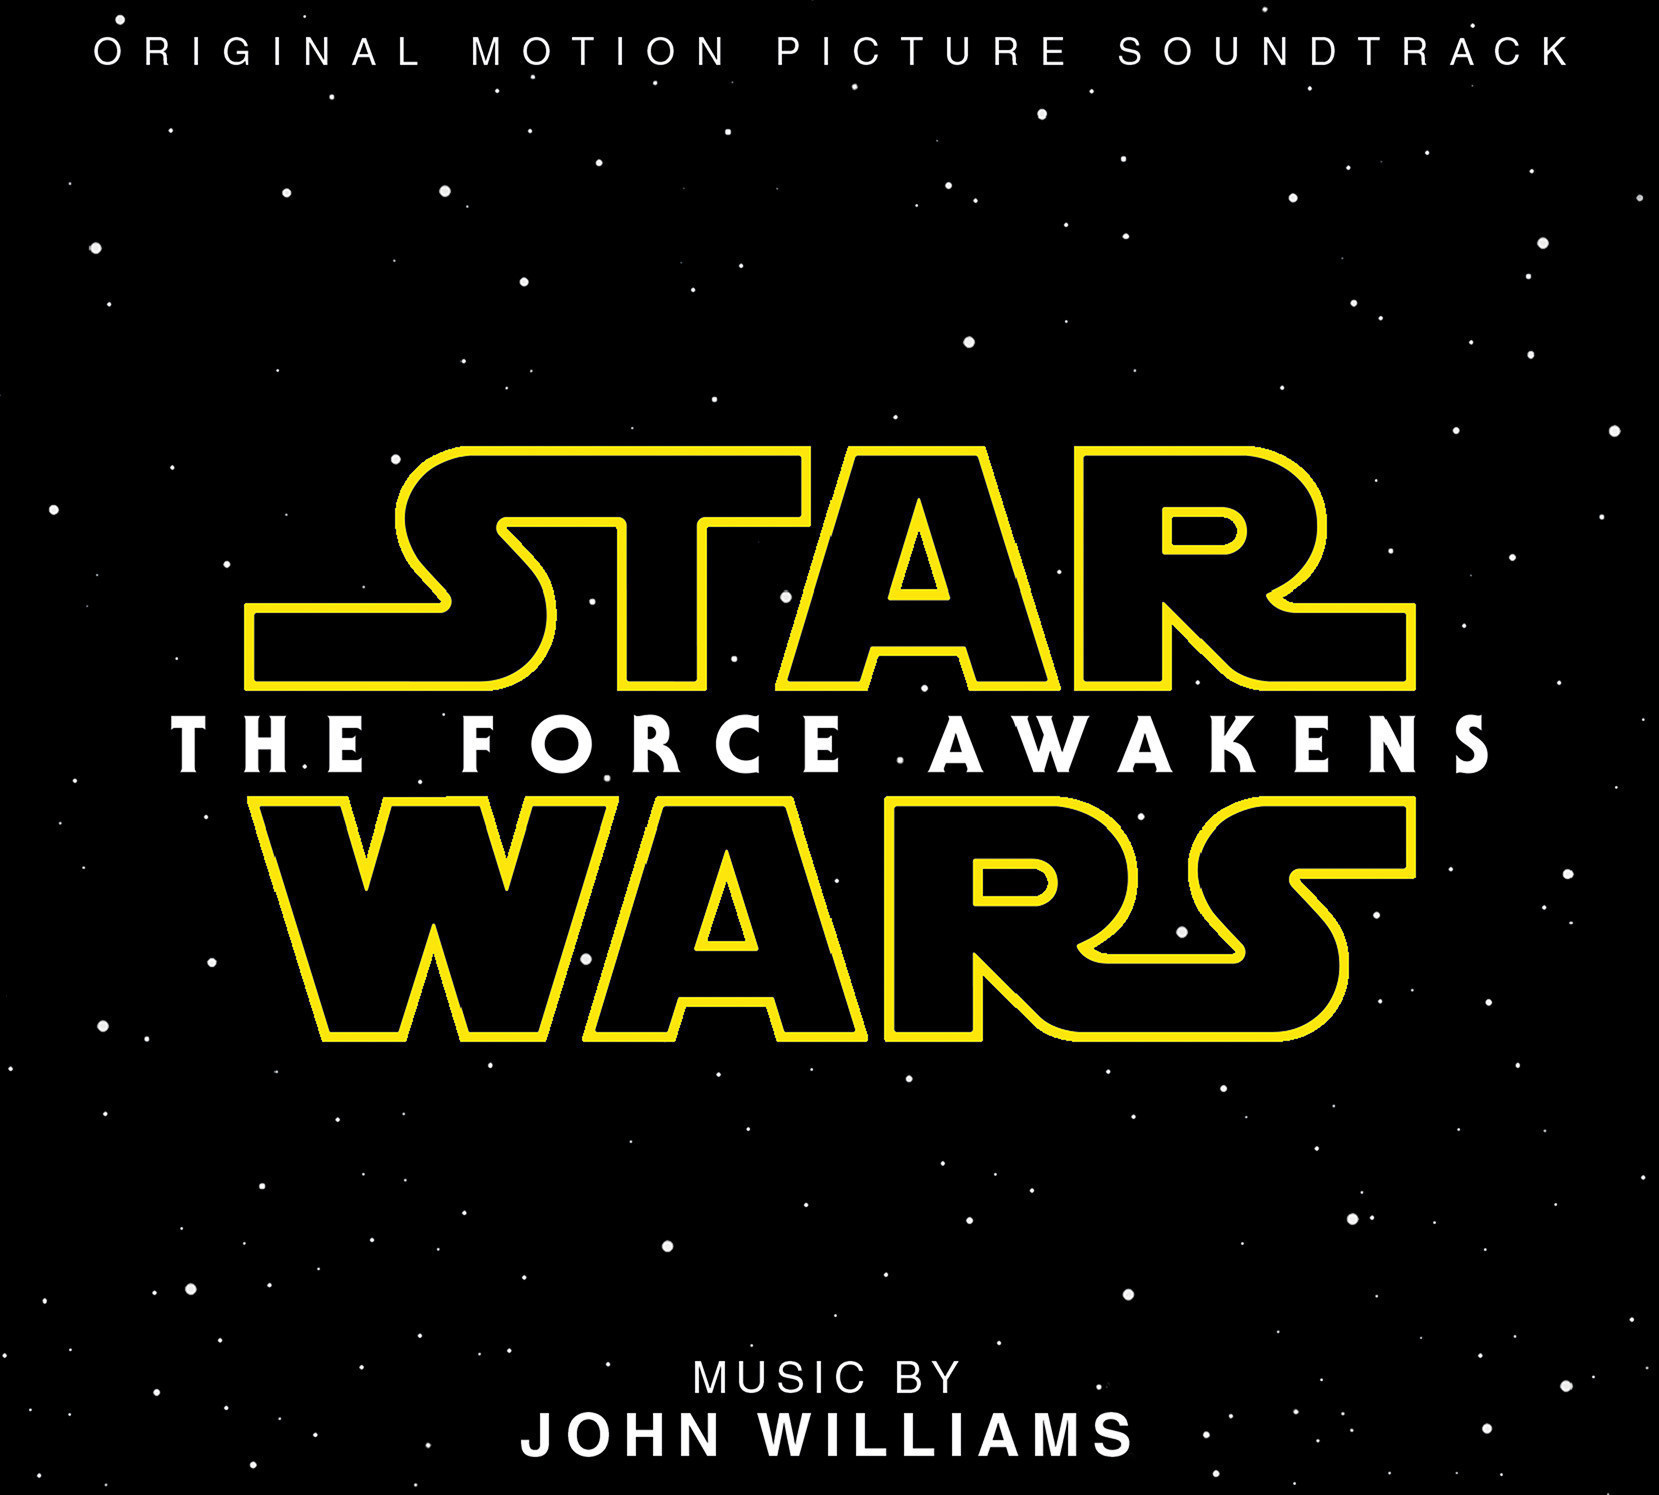 Star Wars the force awakens soundtrack